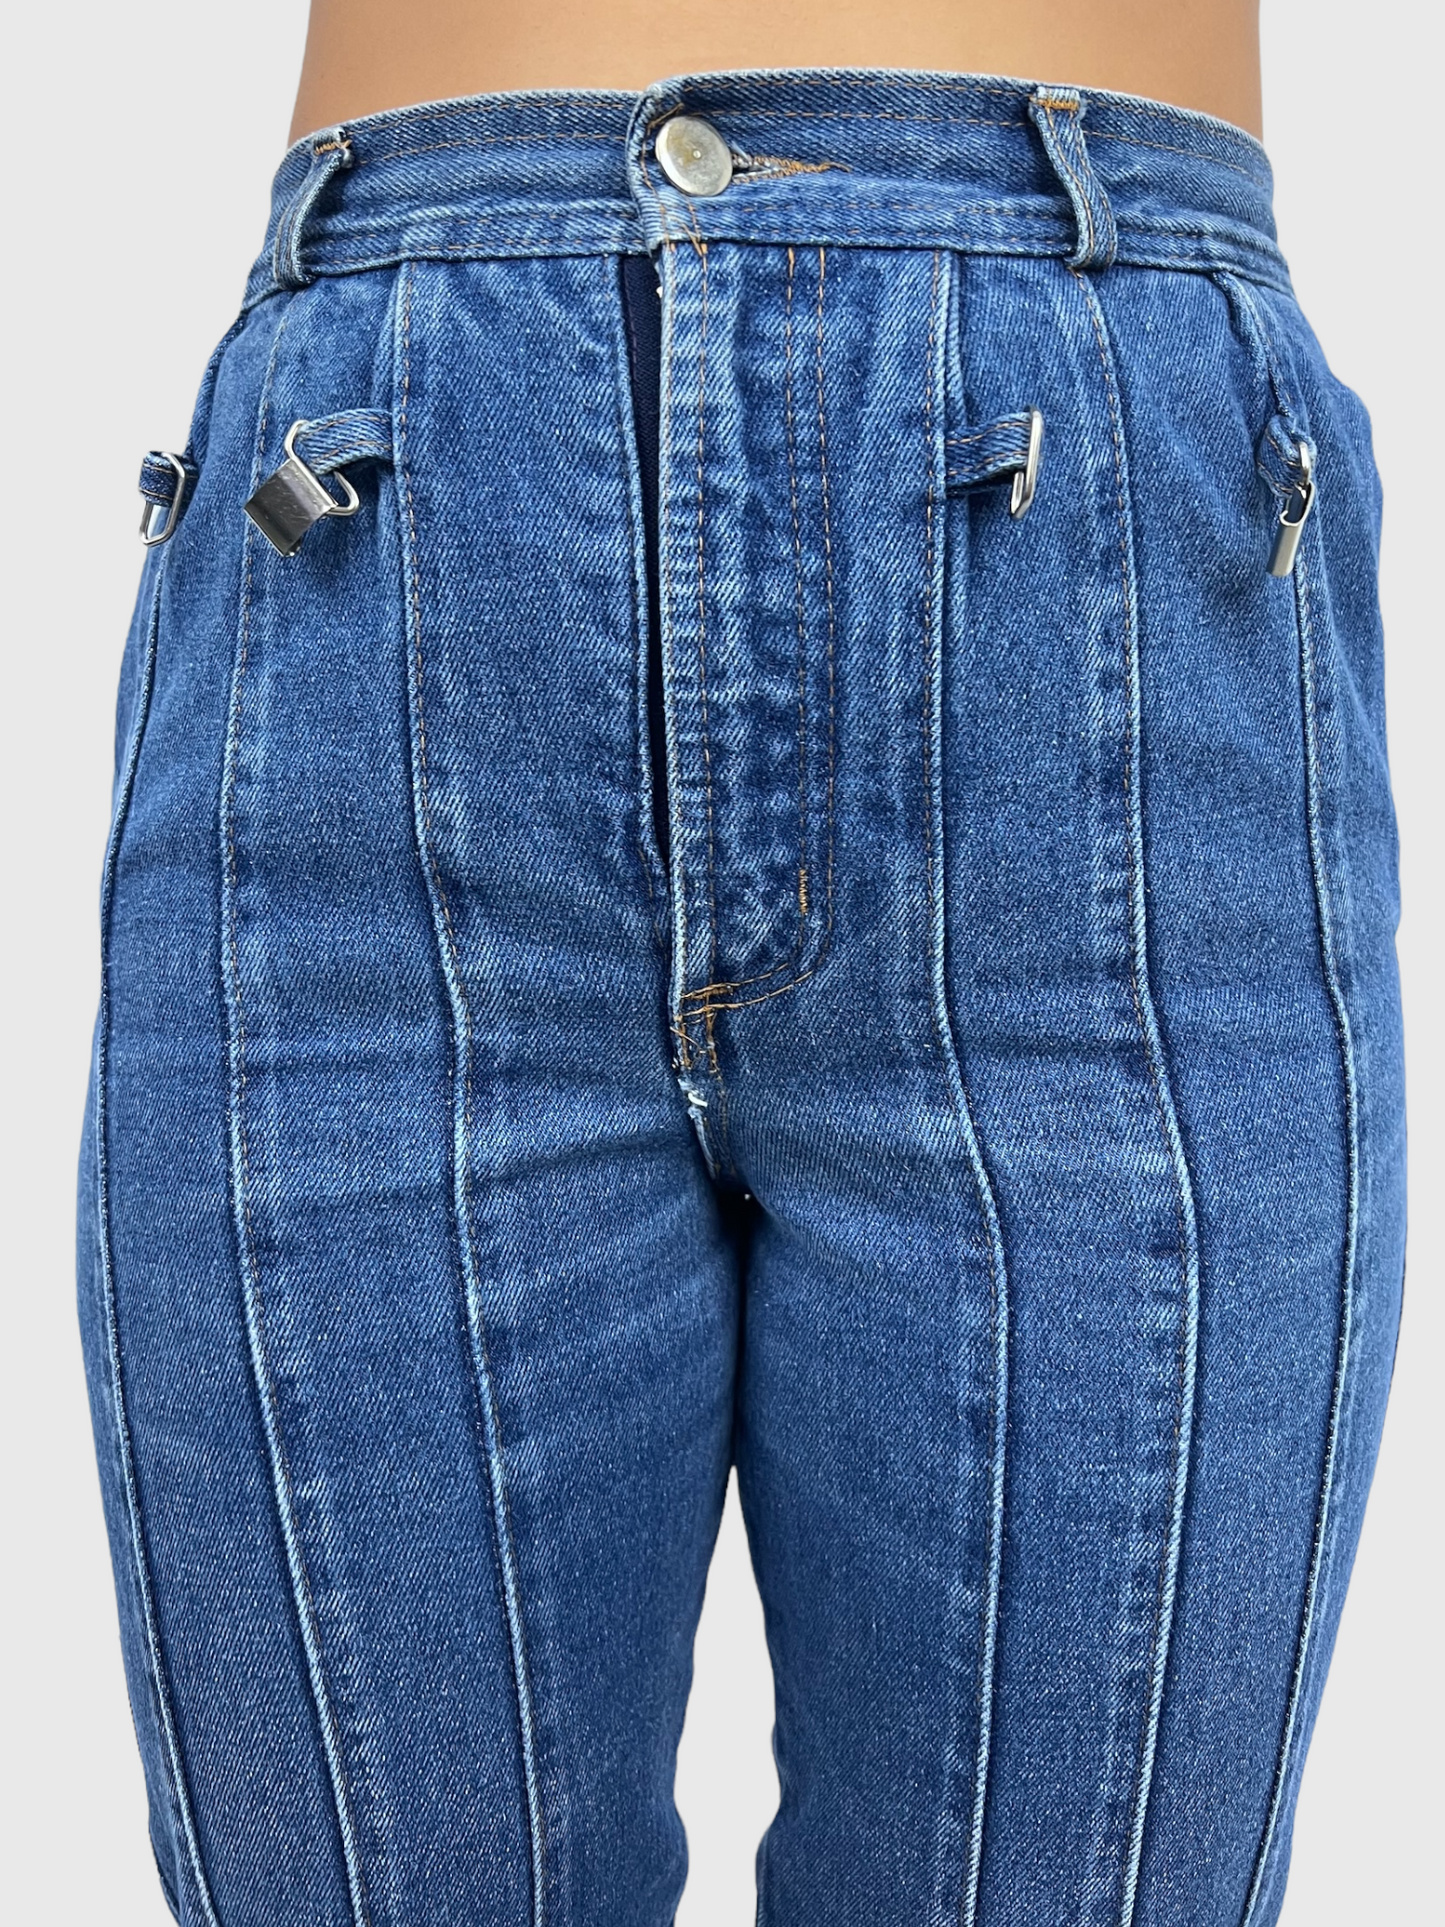 90's Vintage Denim Jeans with Buckle Details Size 6